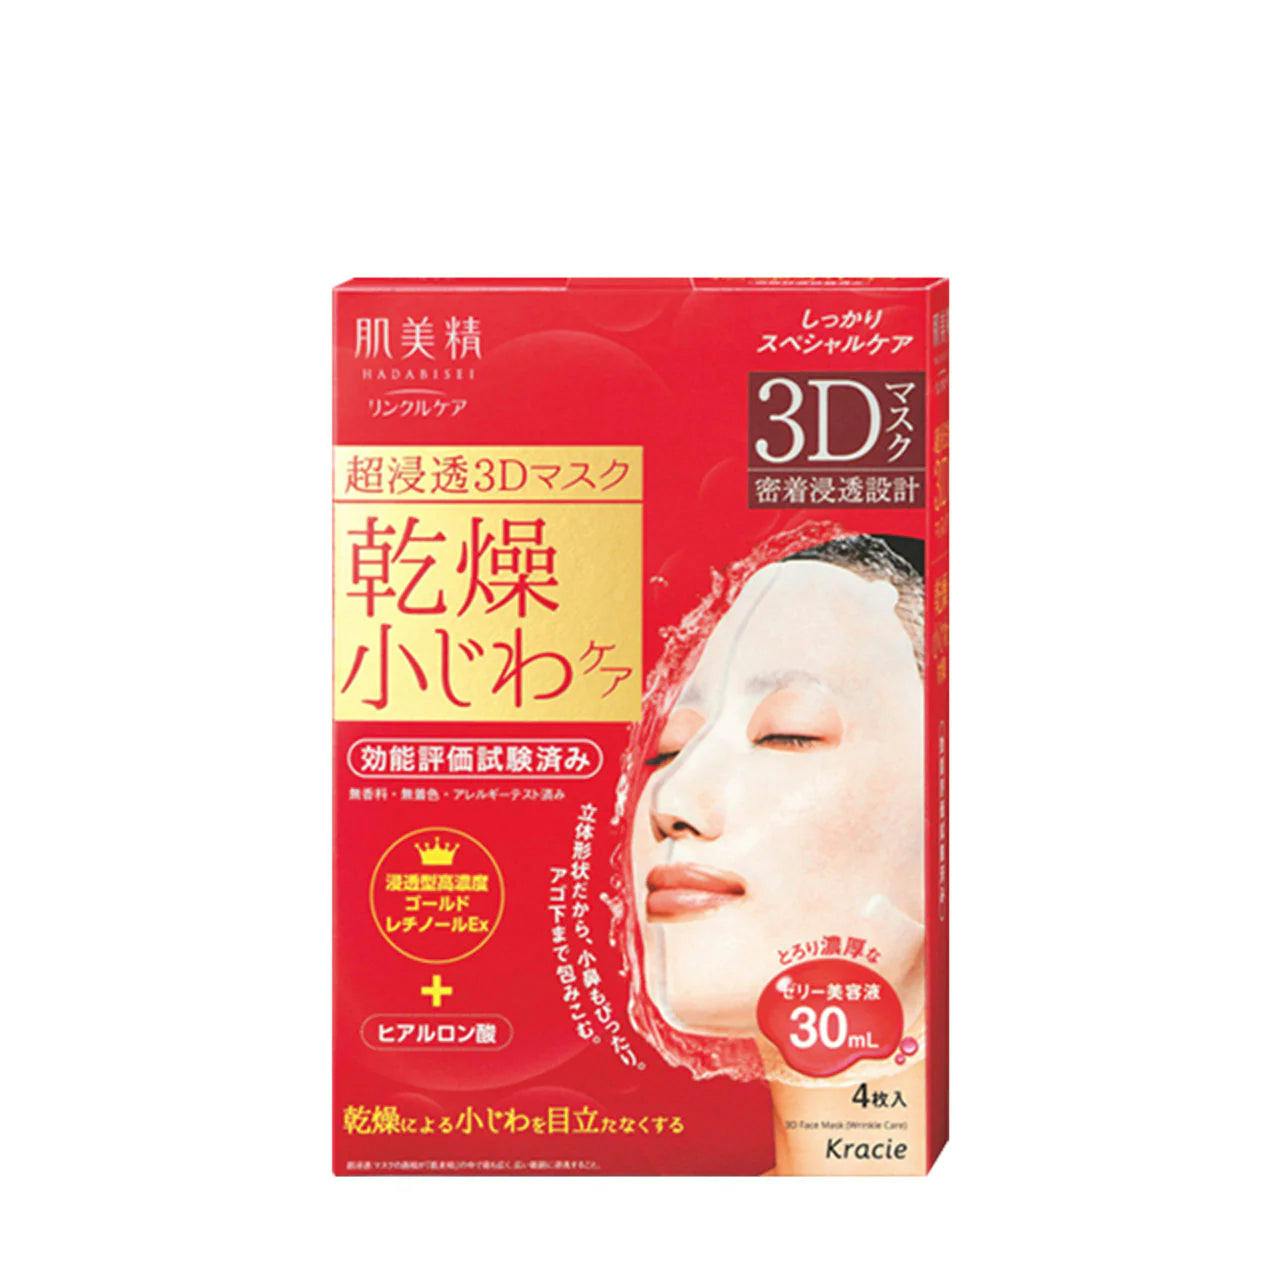 Kracie 肌美精 3D立体面膜 3D Face Mask (Wrinkle Care ) 超浸透 保湿抗皱 4pcs